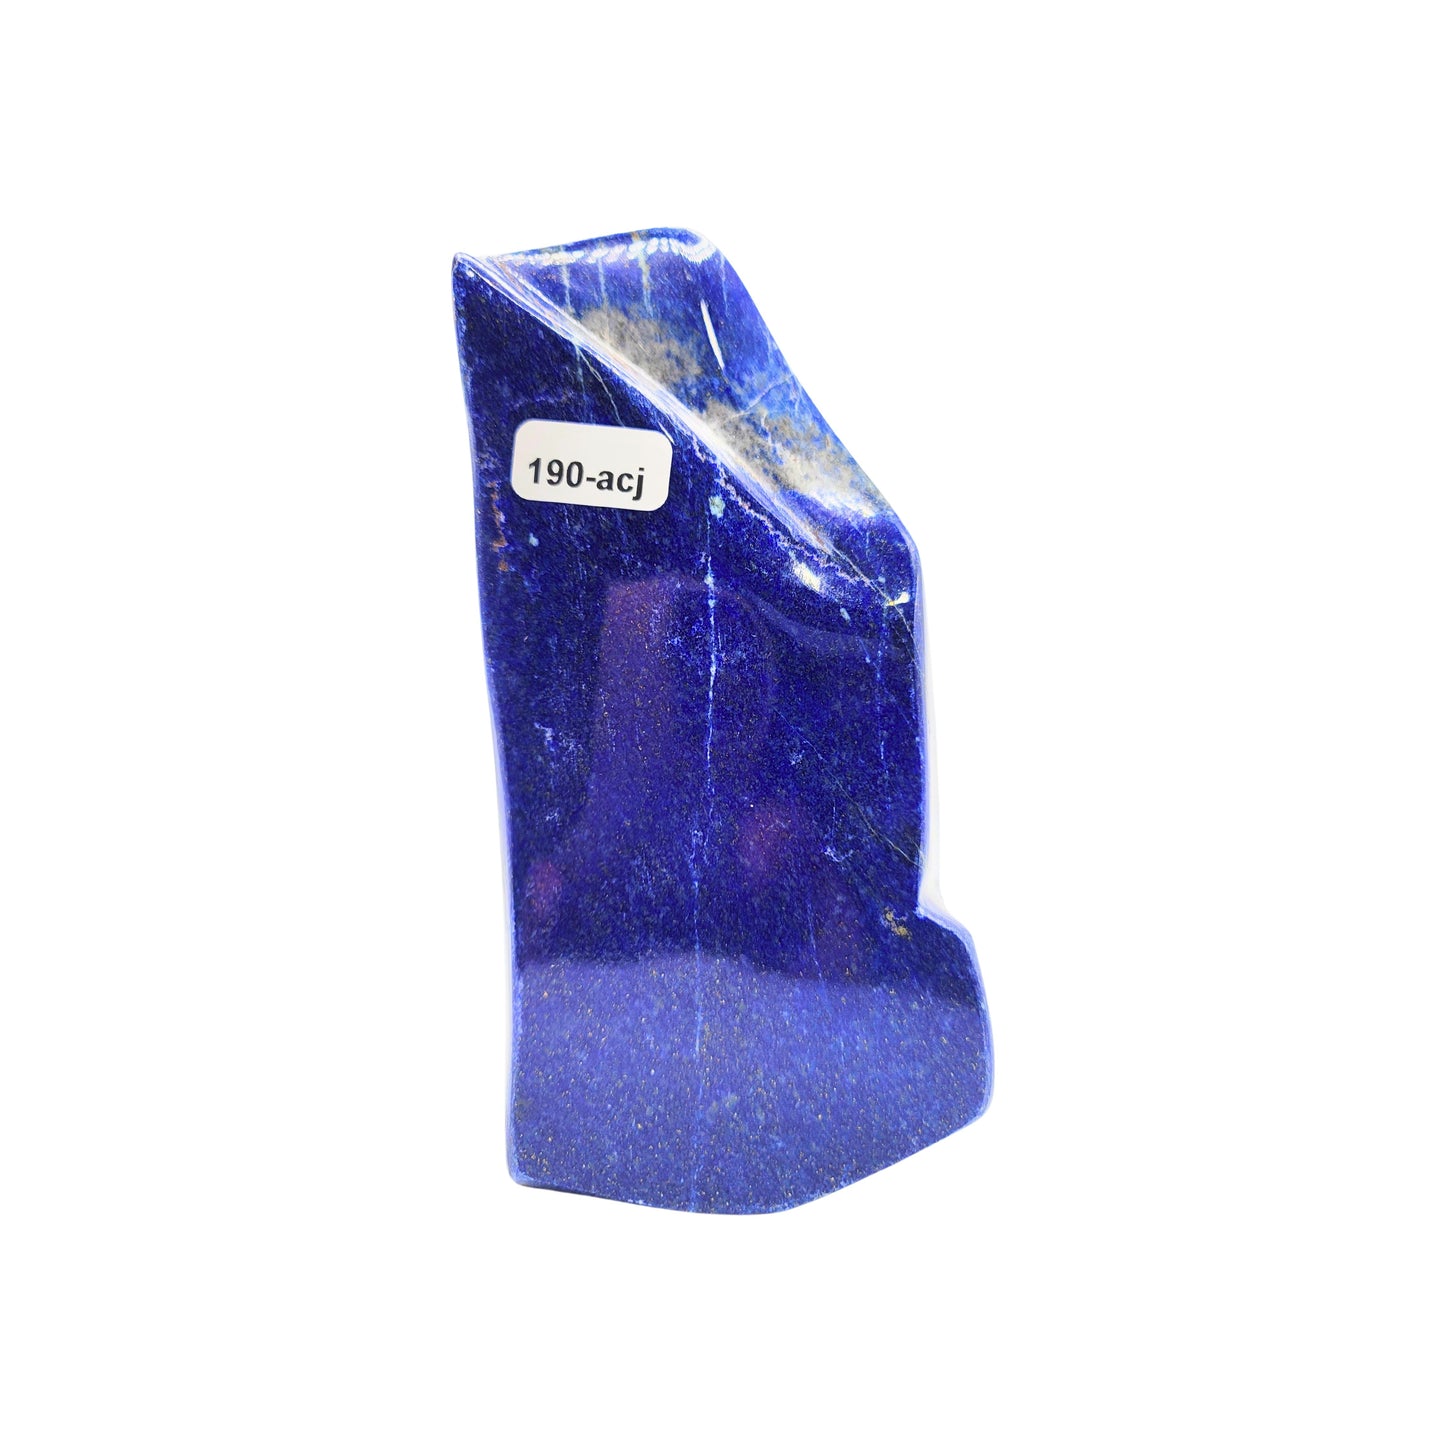 Lapis Lazuli 190-acj